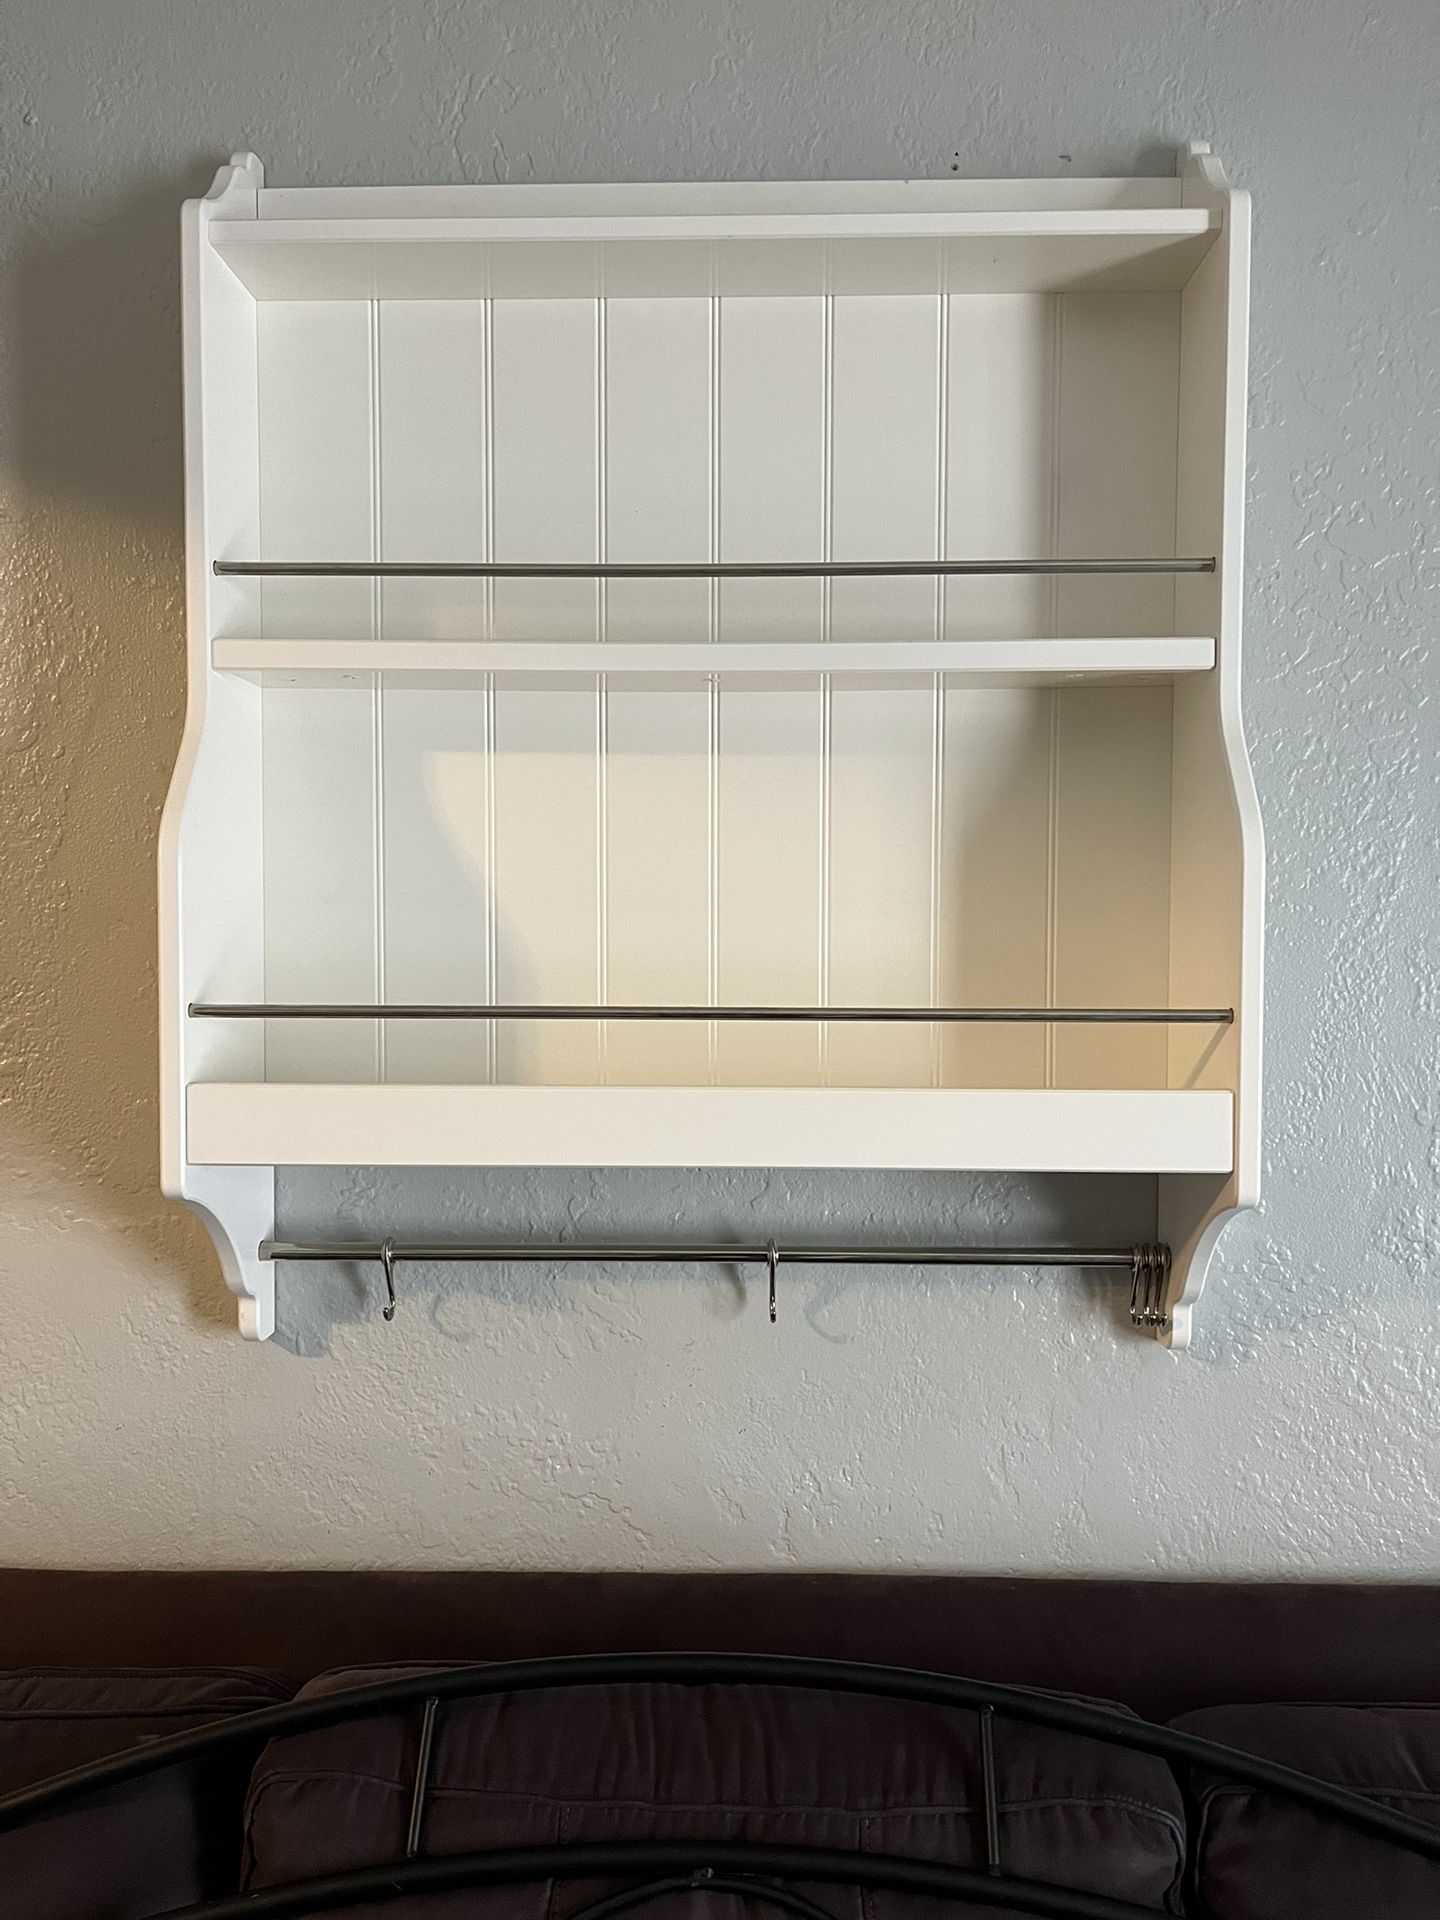 Kitchen Shelf/Plate Display Shelf